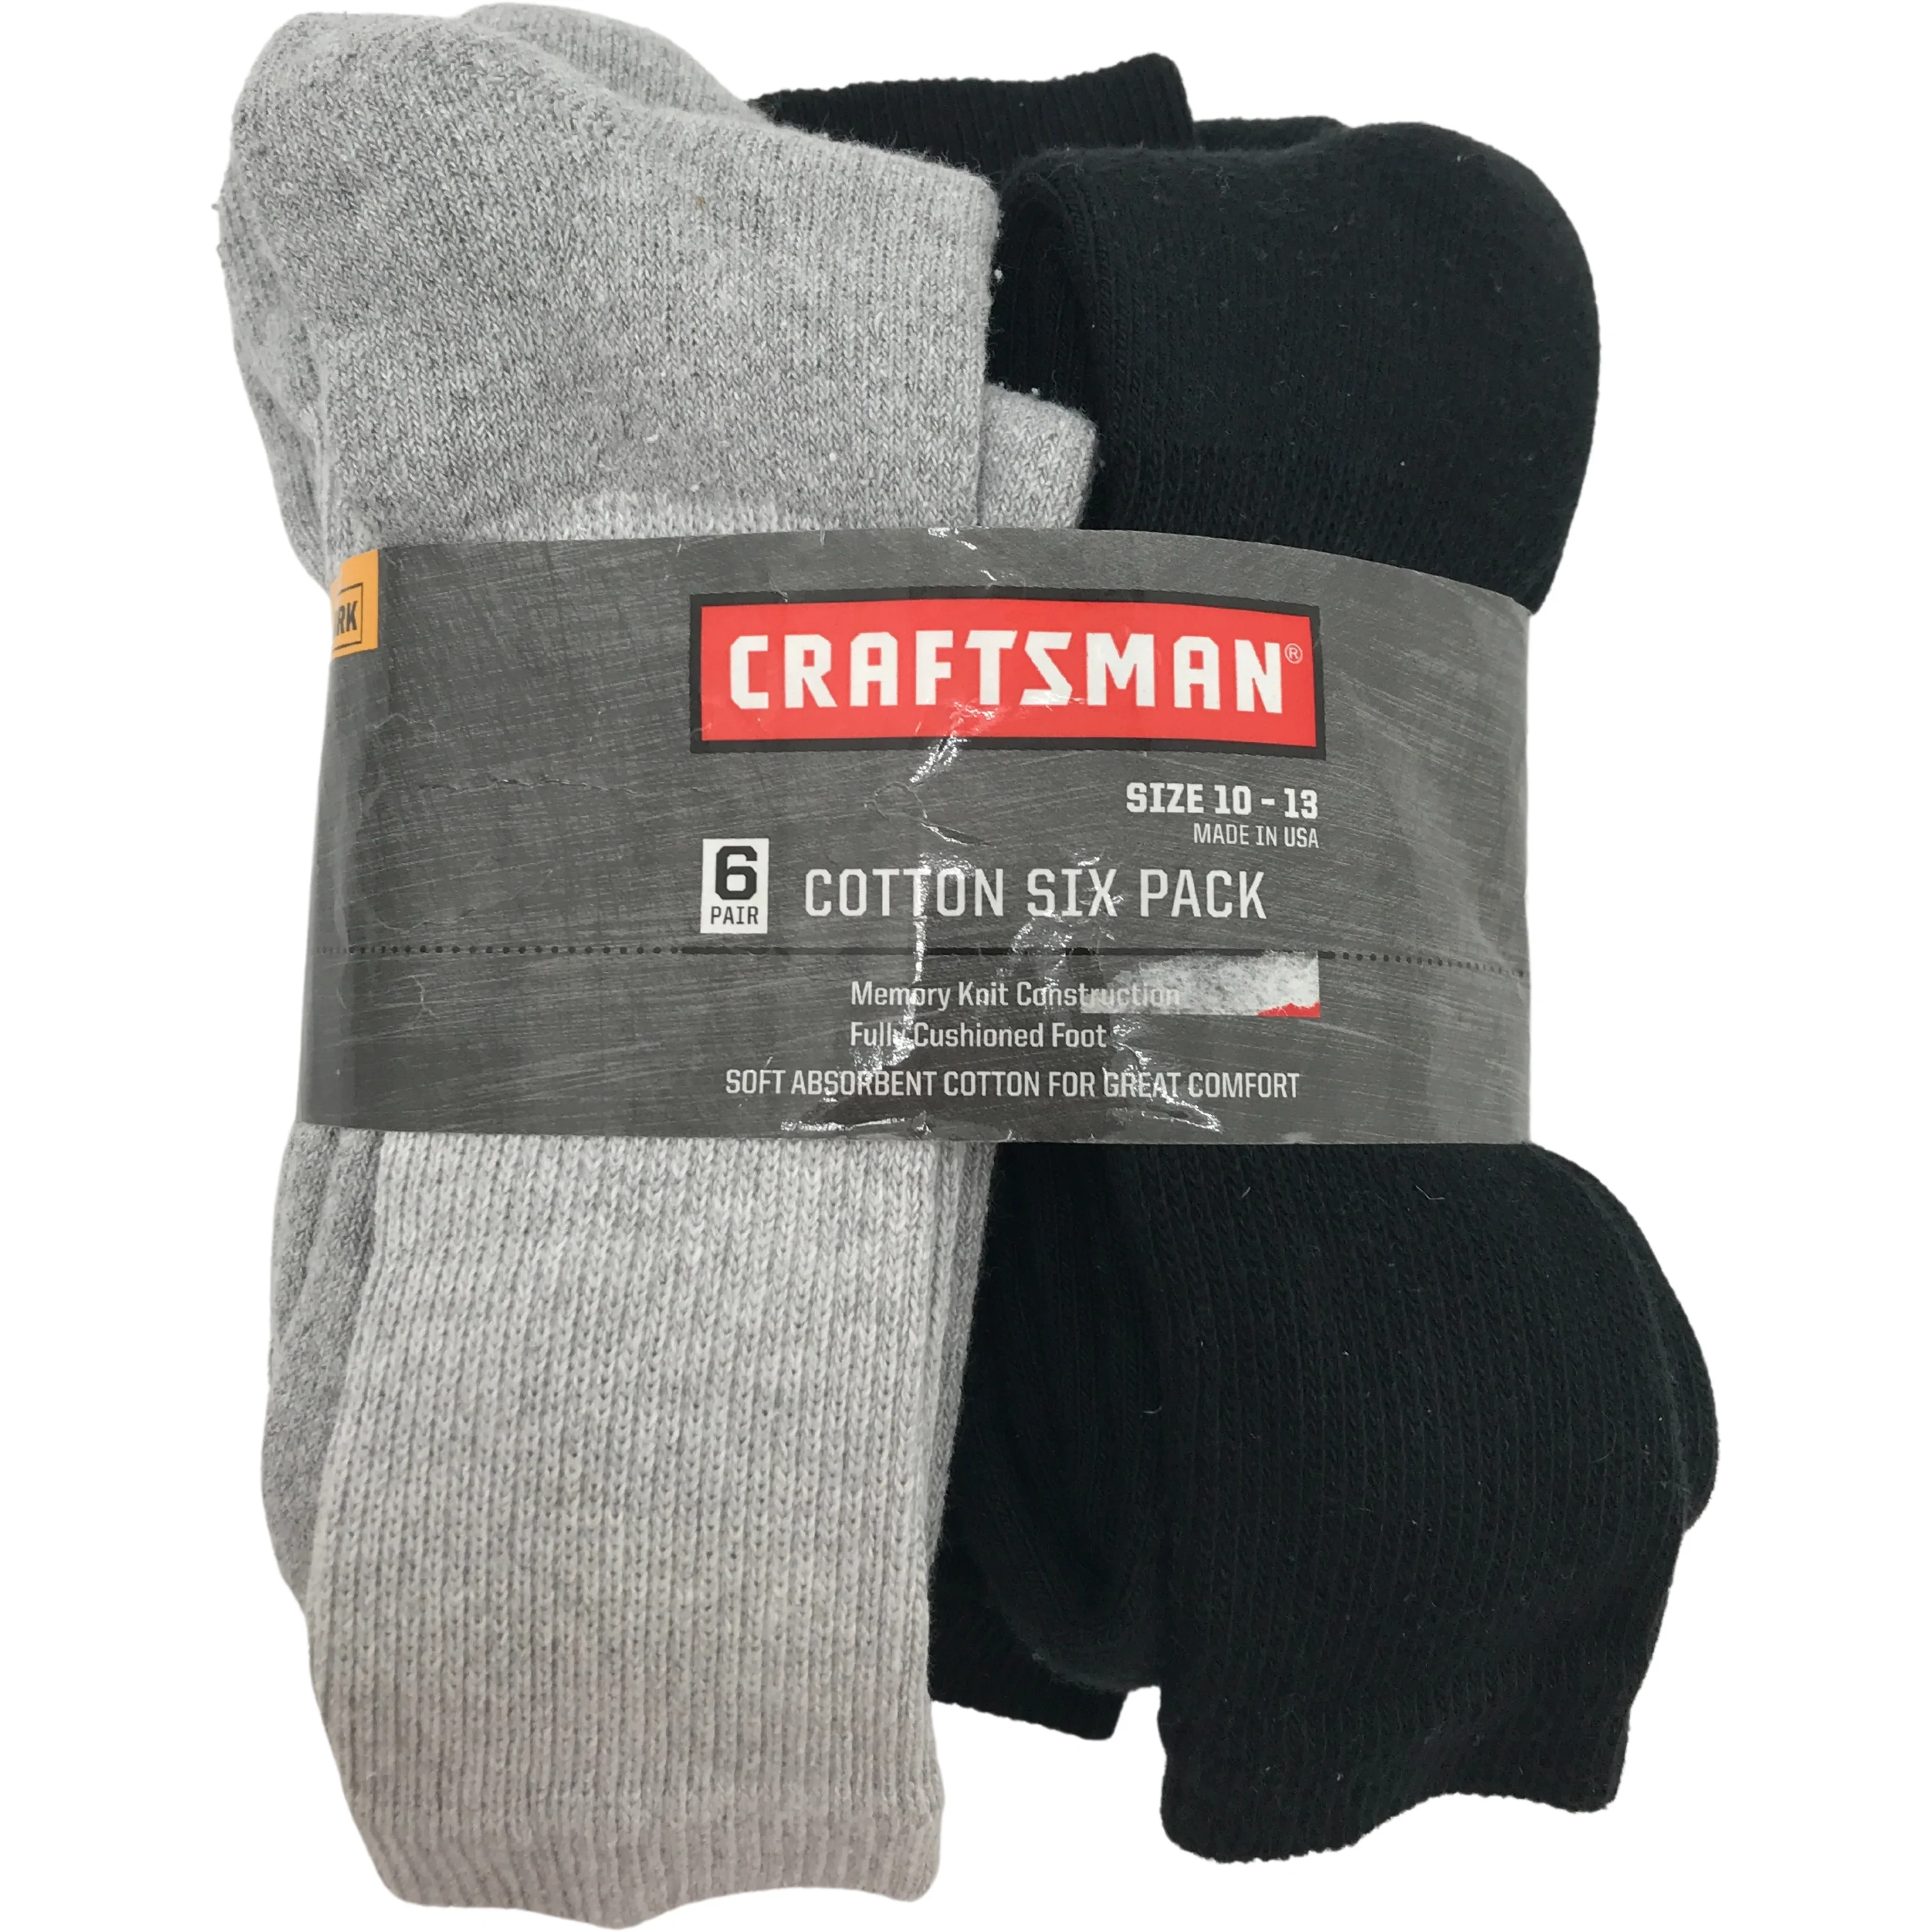 Craftsman Men's Work Socks / Grey & Black / 6 Pack / Cotton Socks